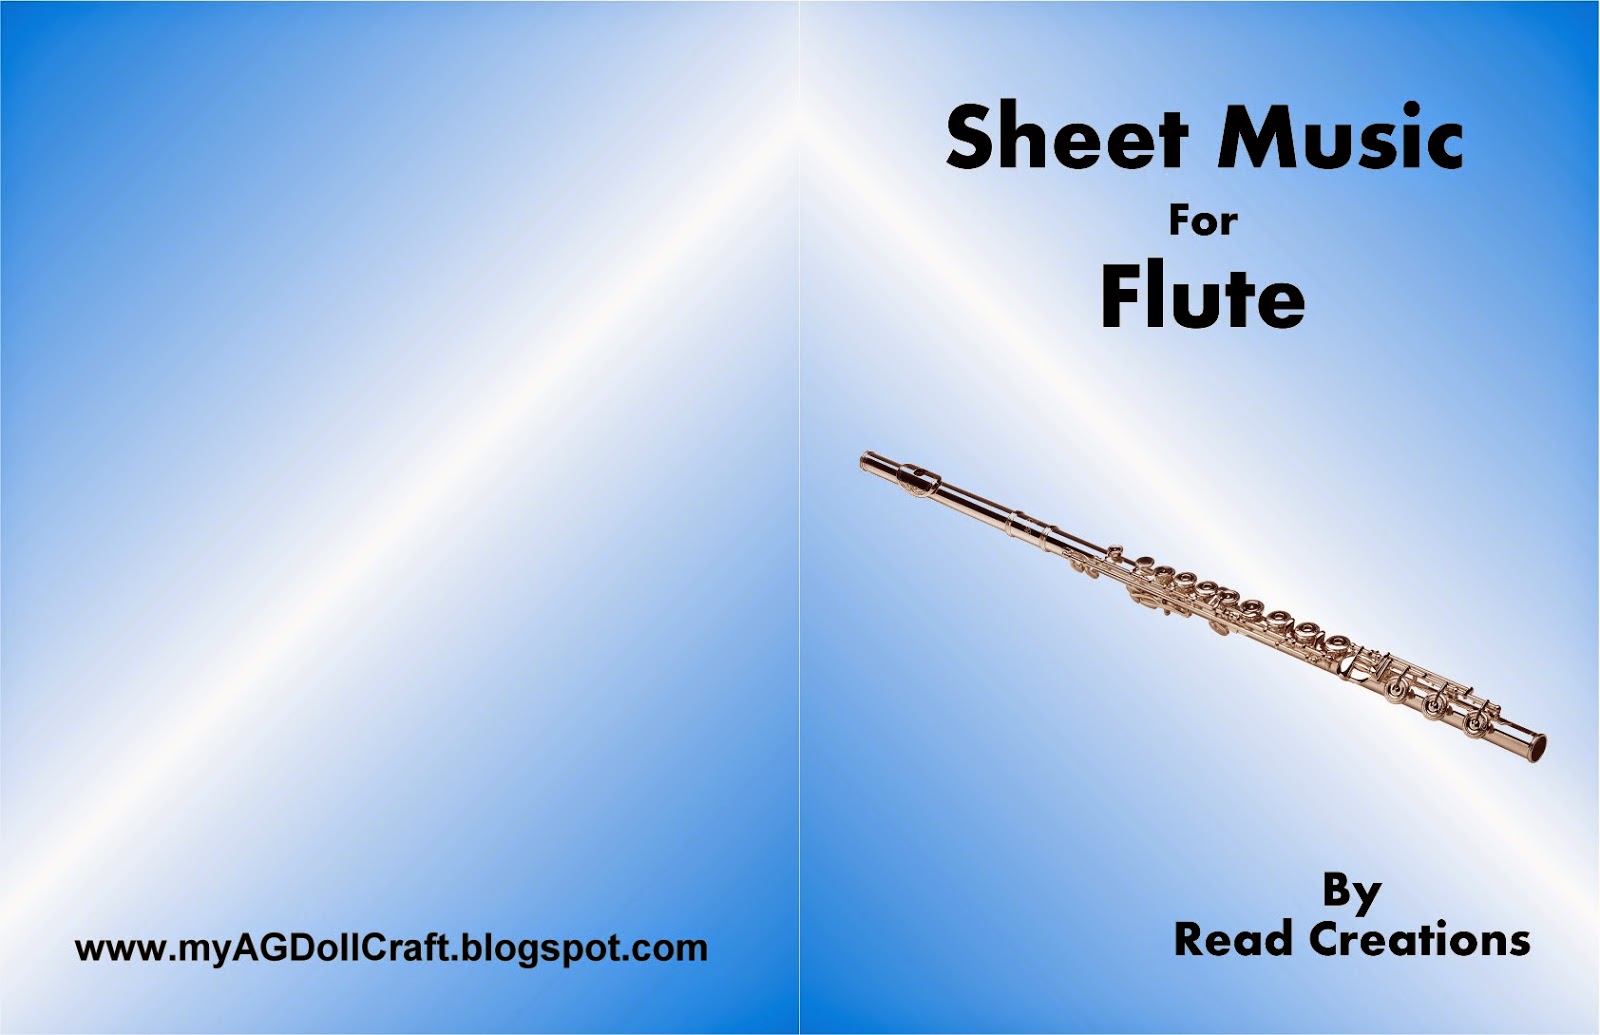 Flute book cover